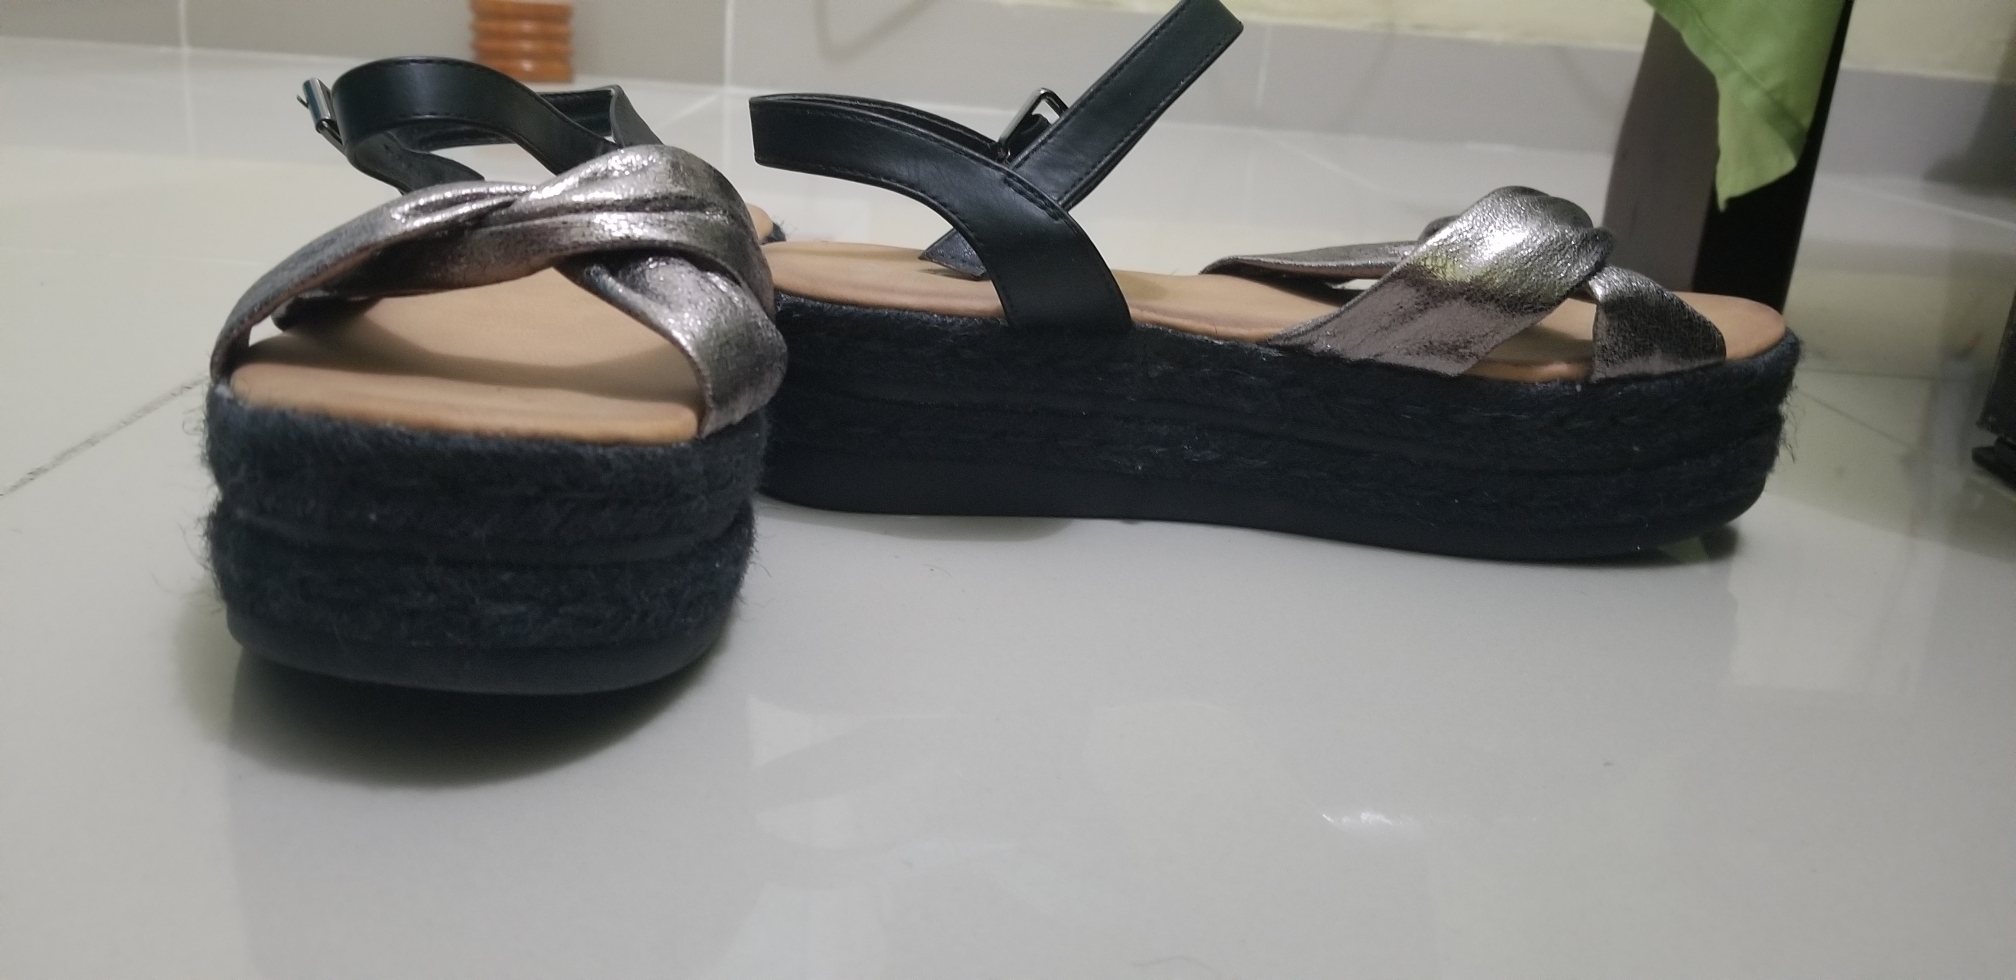 Dos pares de sandalias/zapatillas negras de plataforma